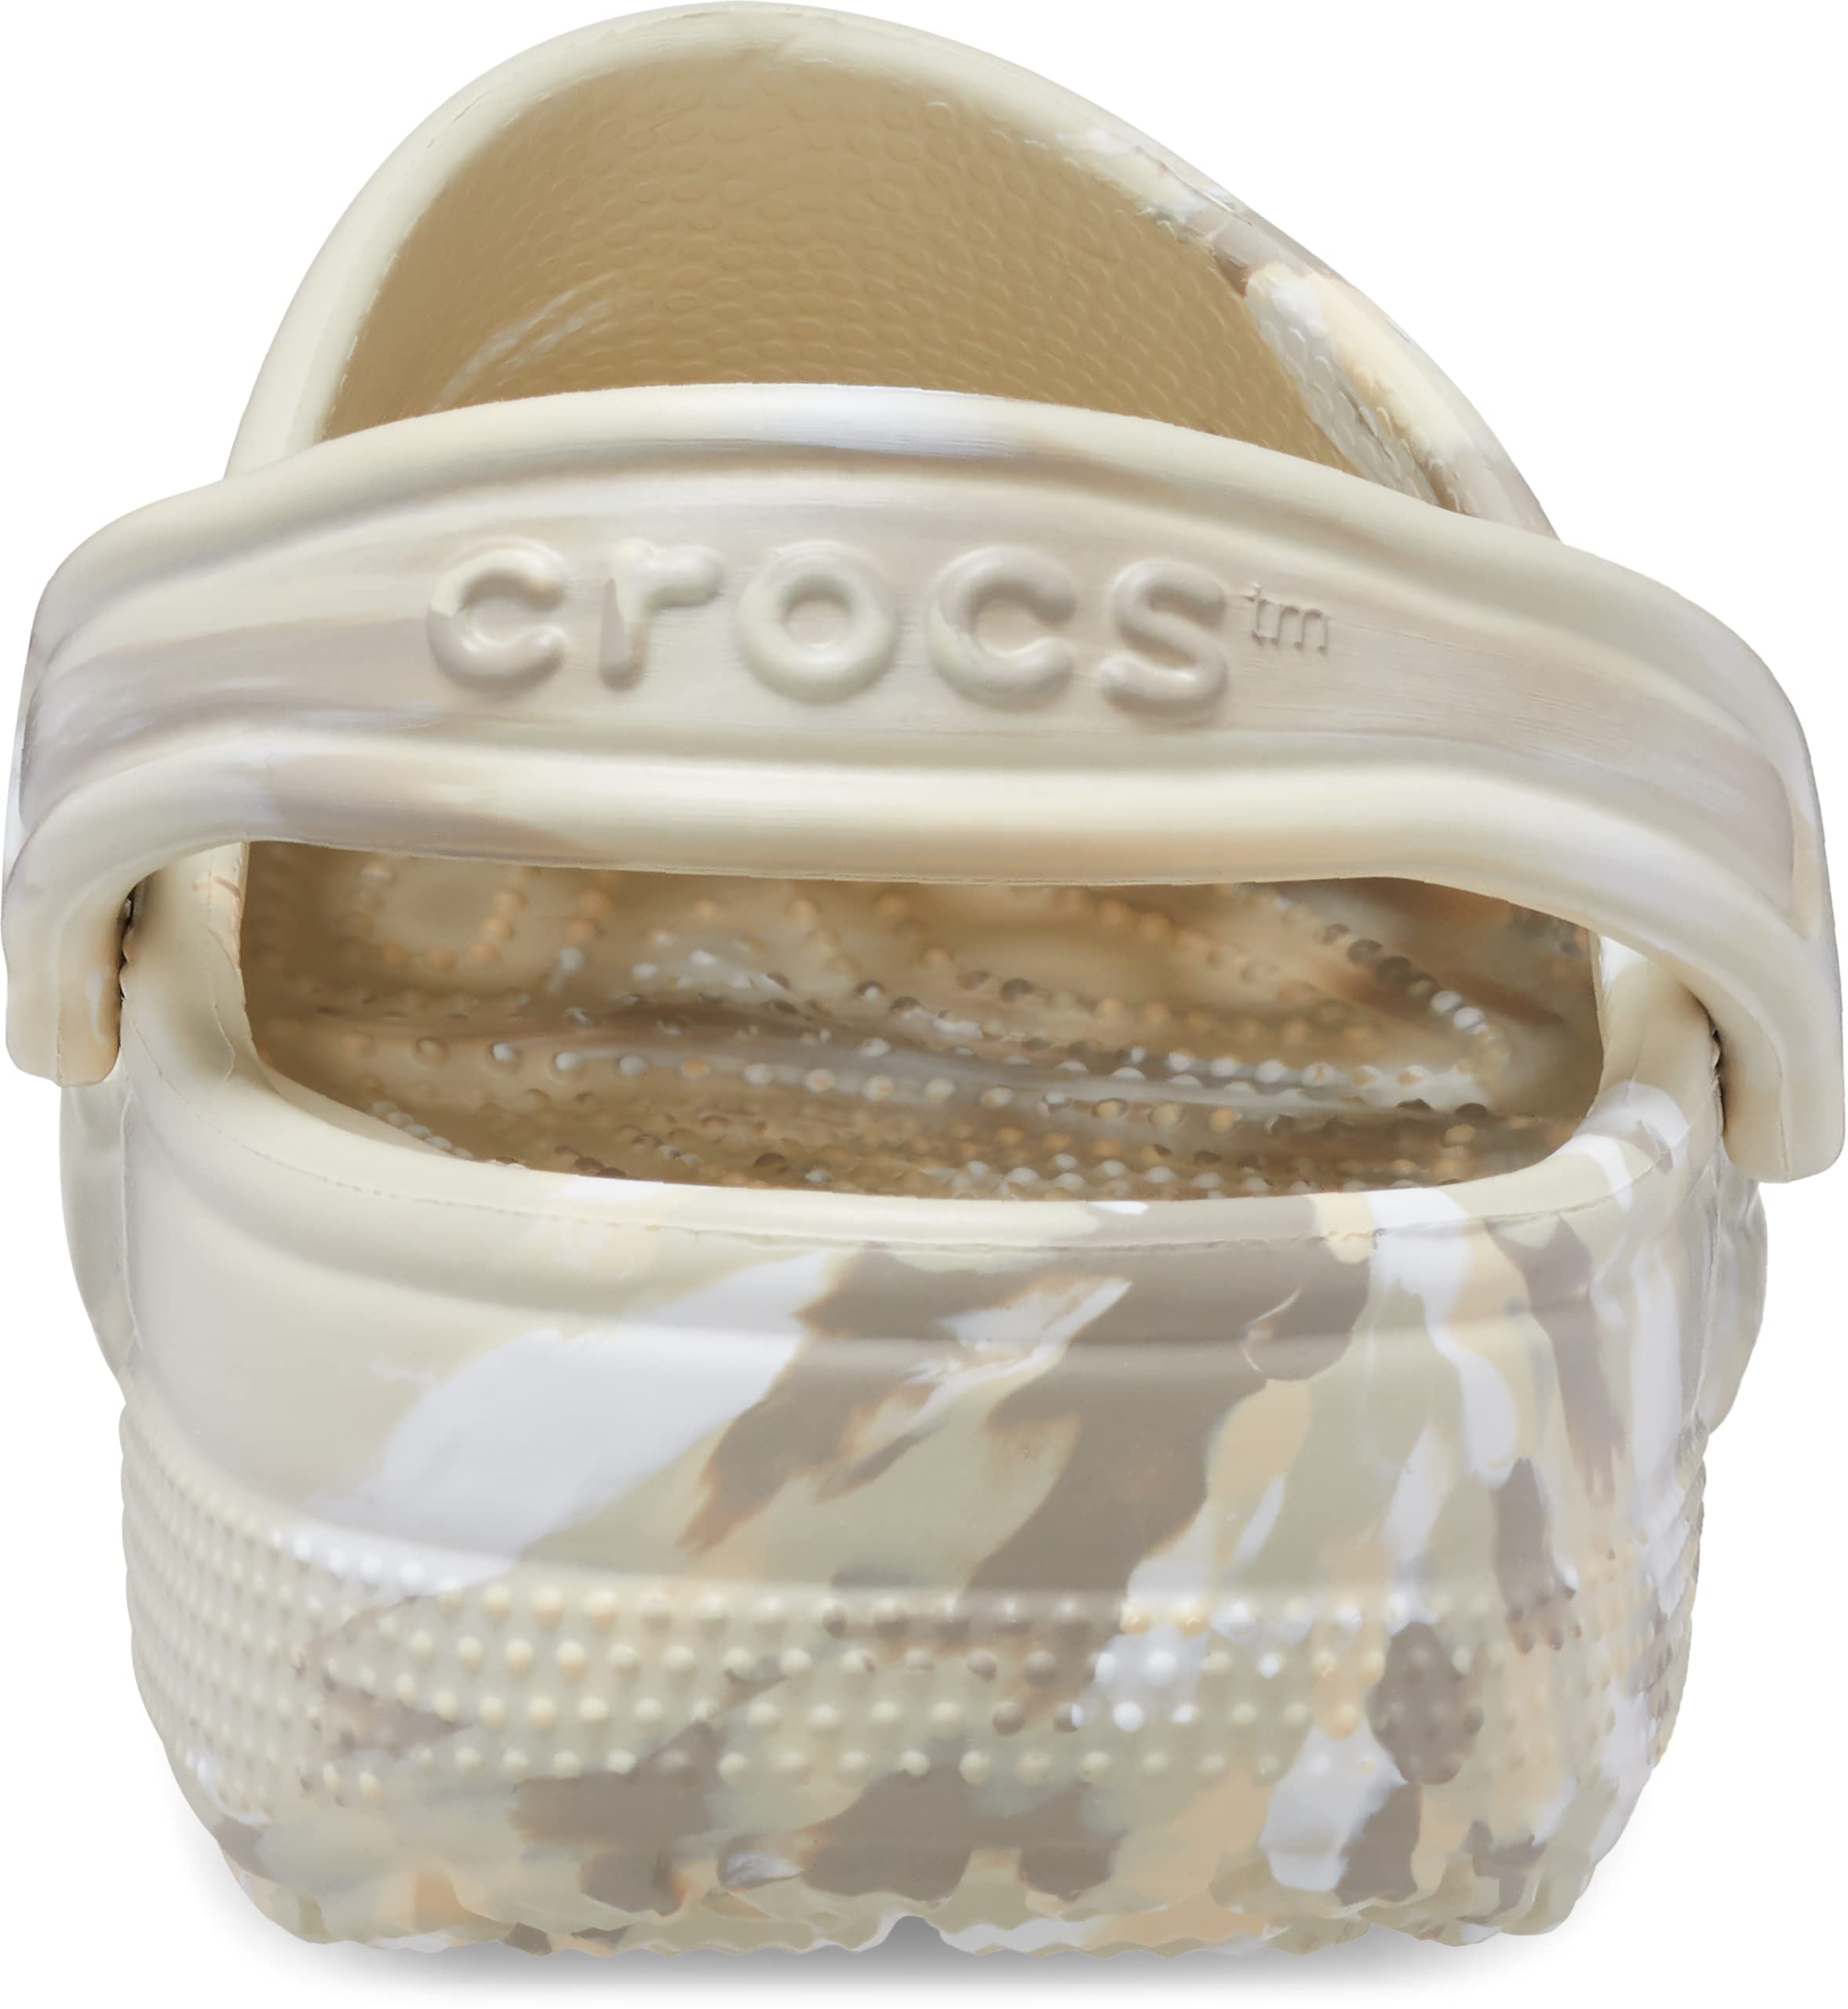 Crocs Unisex Classic Marbled Tie Dye Clog, Bone/Multi, 6 US Men